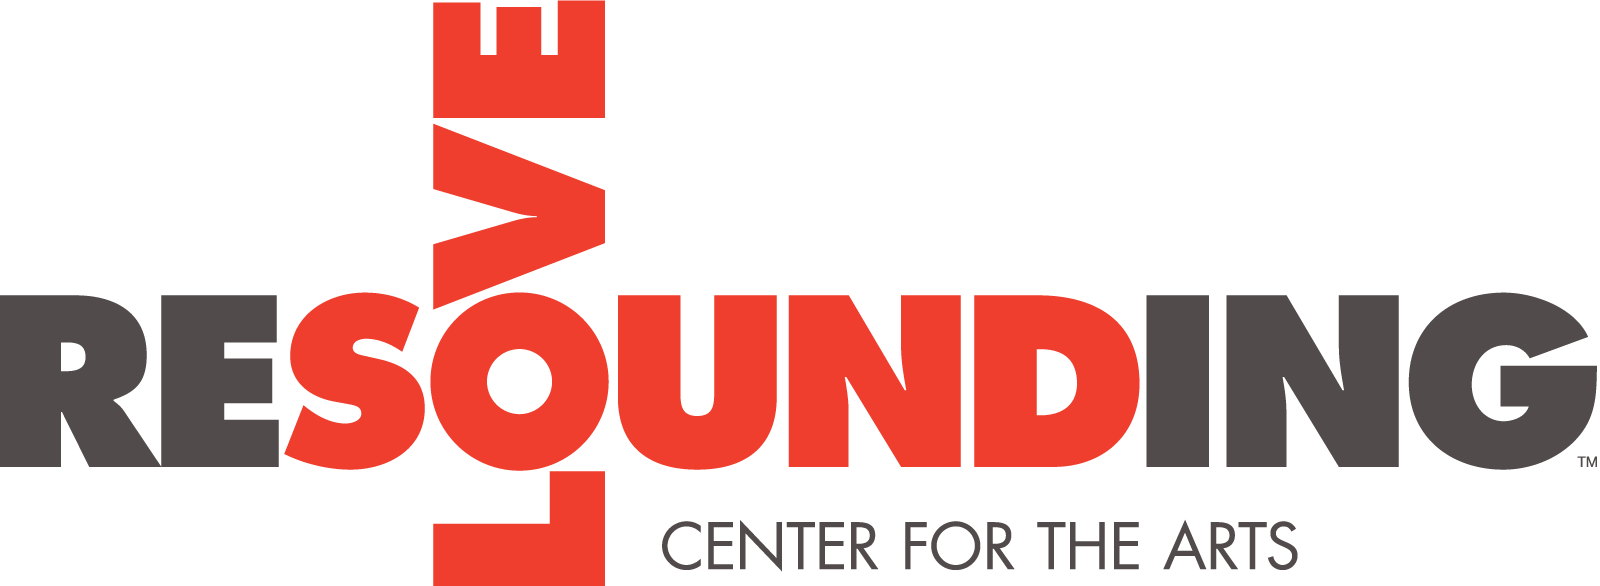 Resounding Love logo